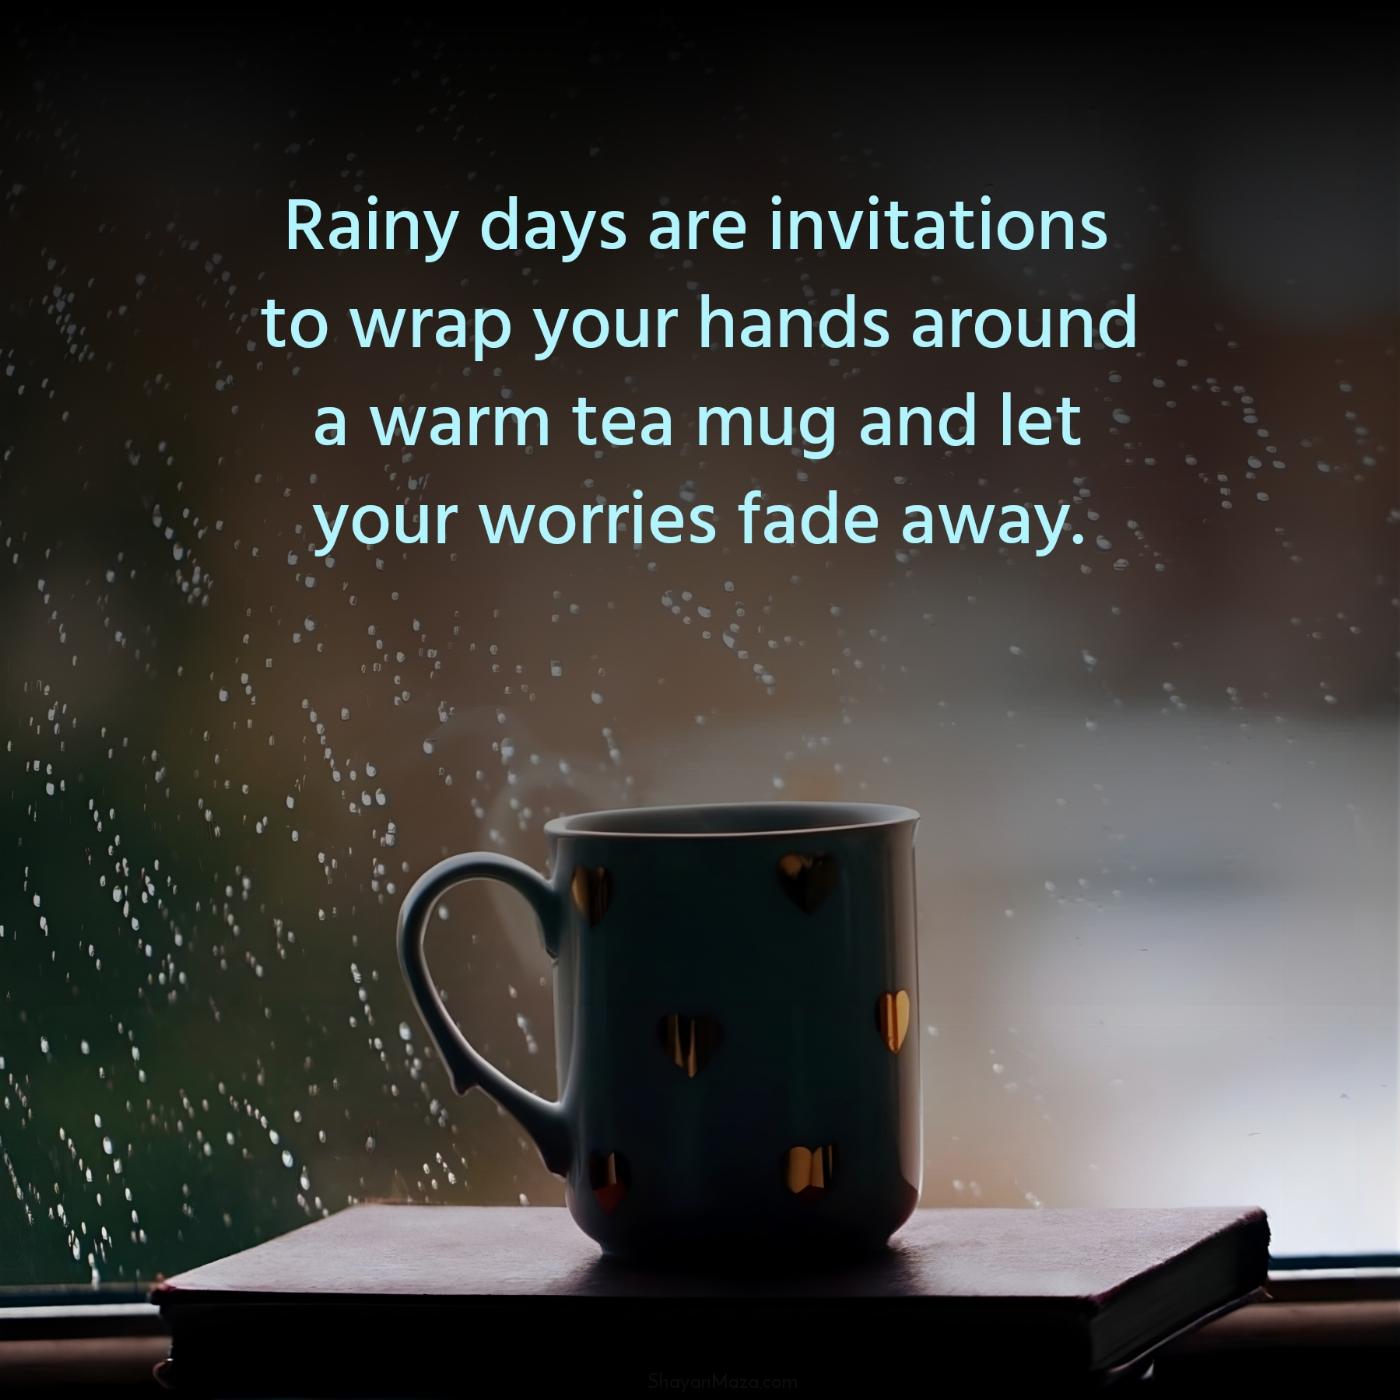 Rainy days are invitations to wrap your hands around a warm tea mug